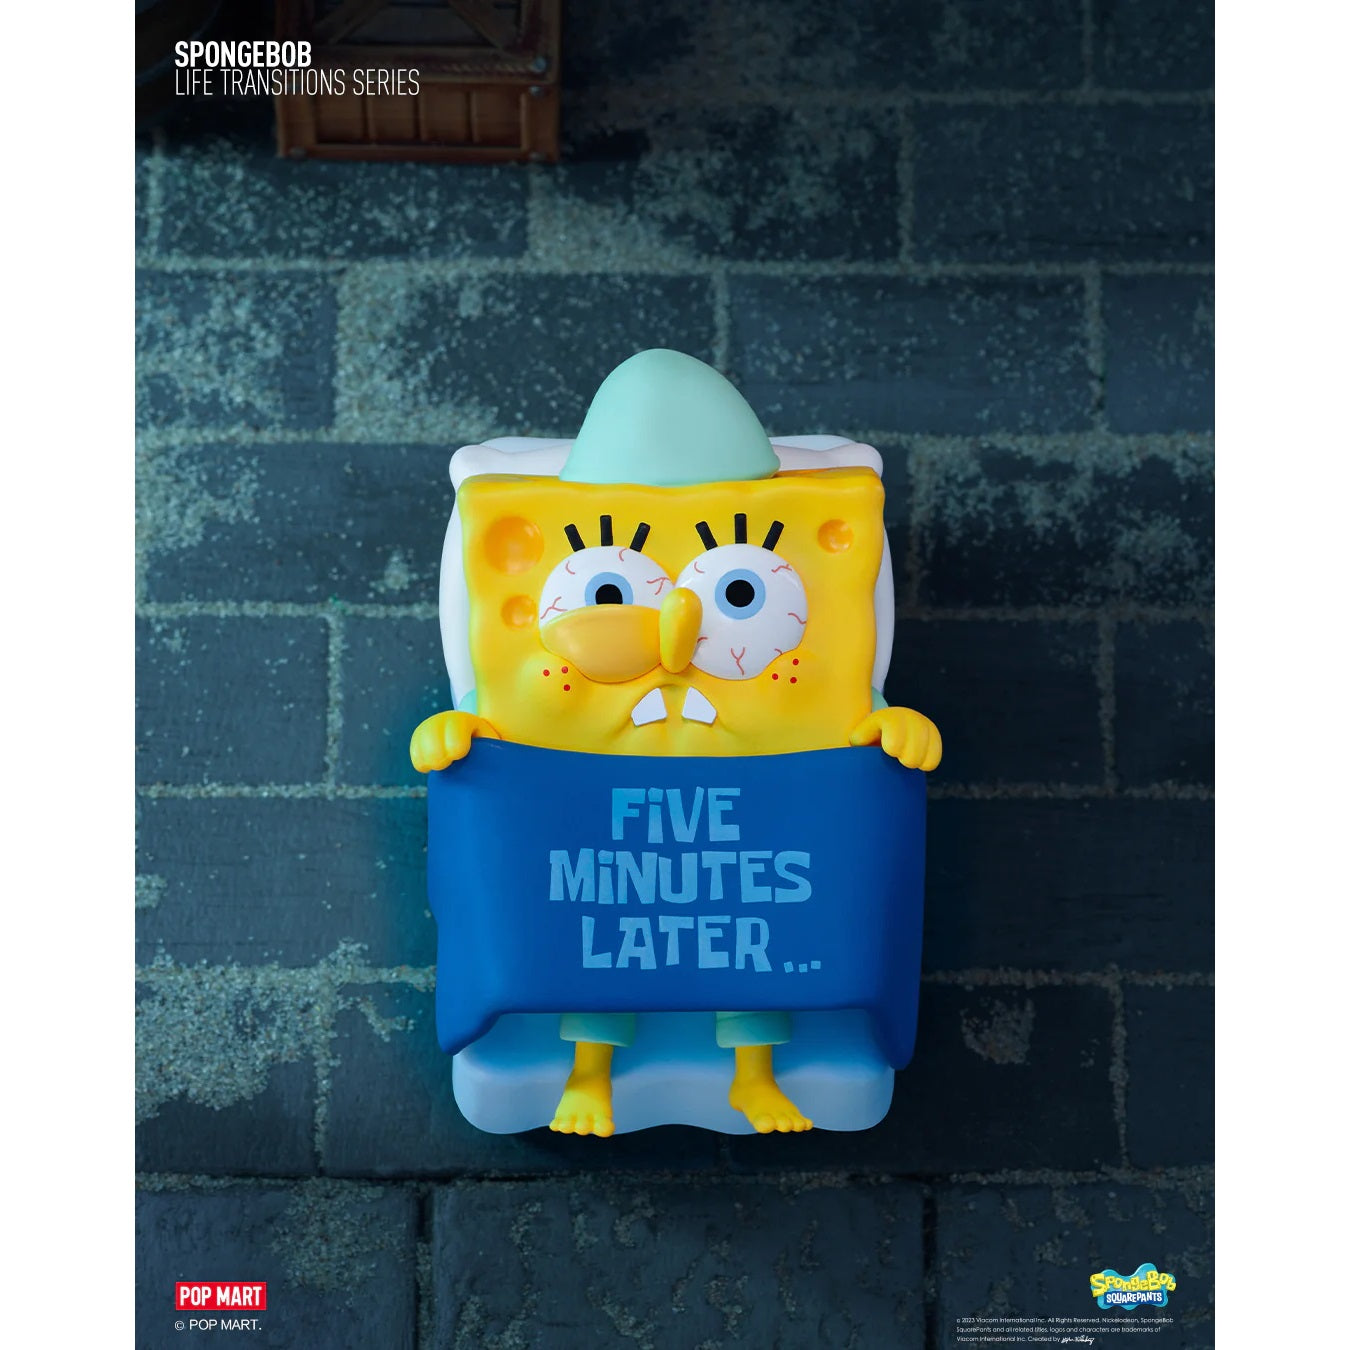 Pop Mart SpongeBob Life Transitions Series-Single Box (Random)-Pop Mart-Ace Cards & Collectibles